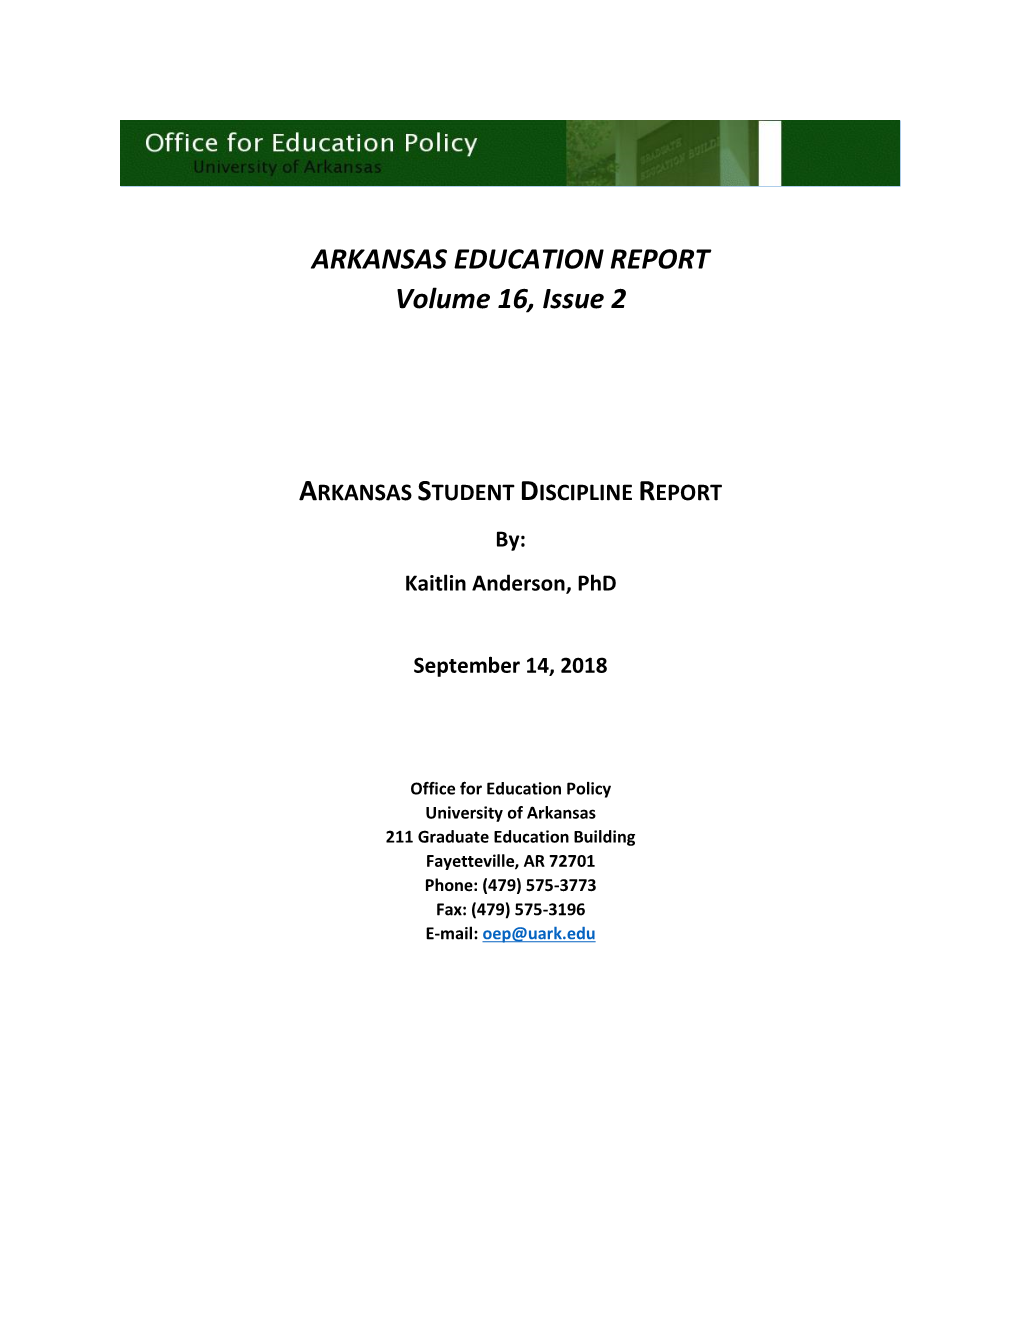 Arkansas Student Discipline Report